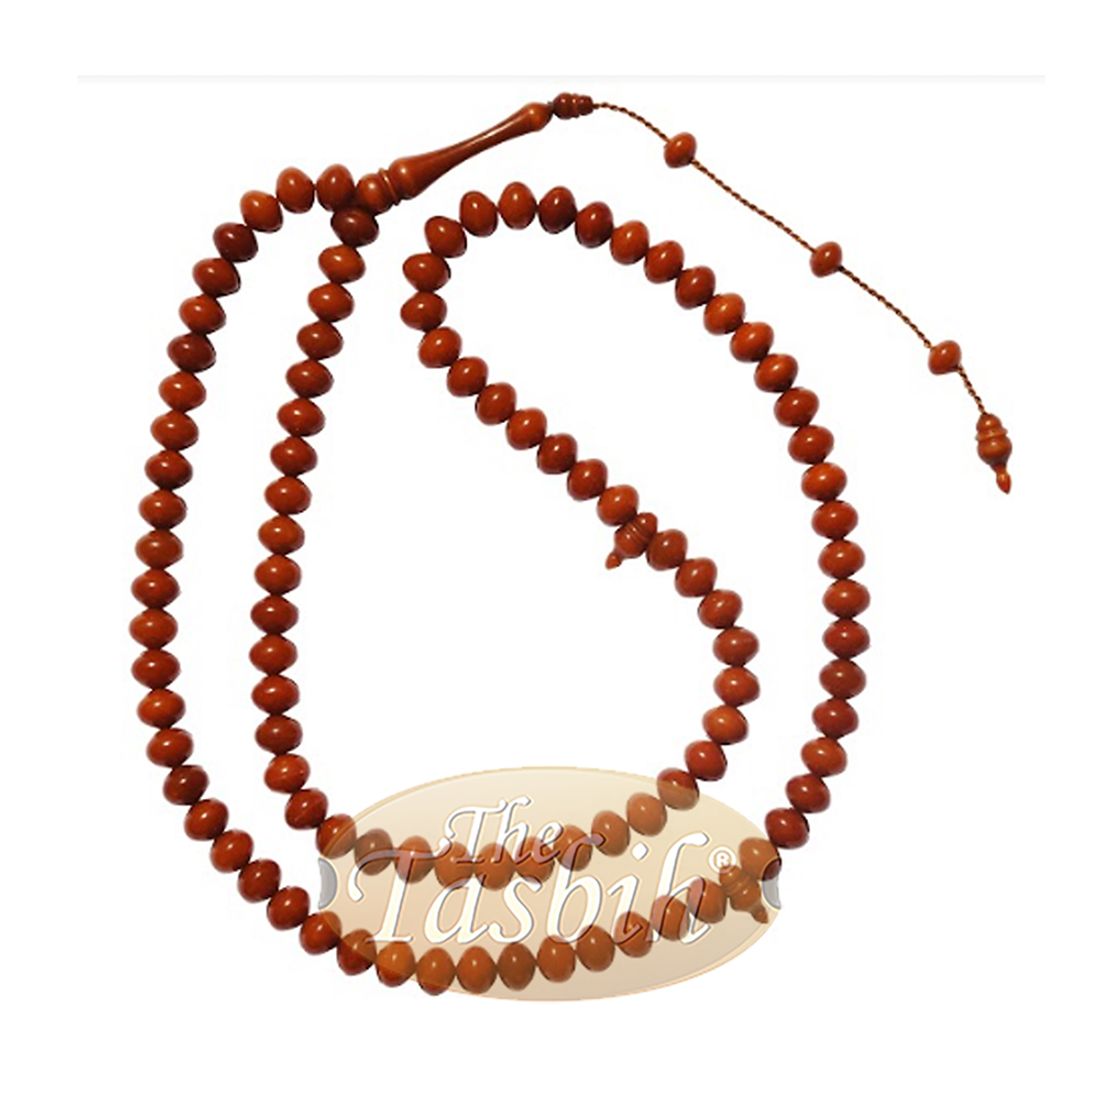 8x10mm Caramel Color Monomer Misbaha Prayer Beads Islamic Rosary